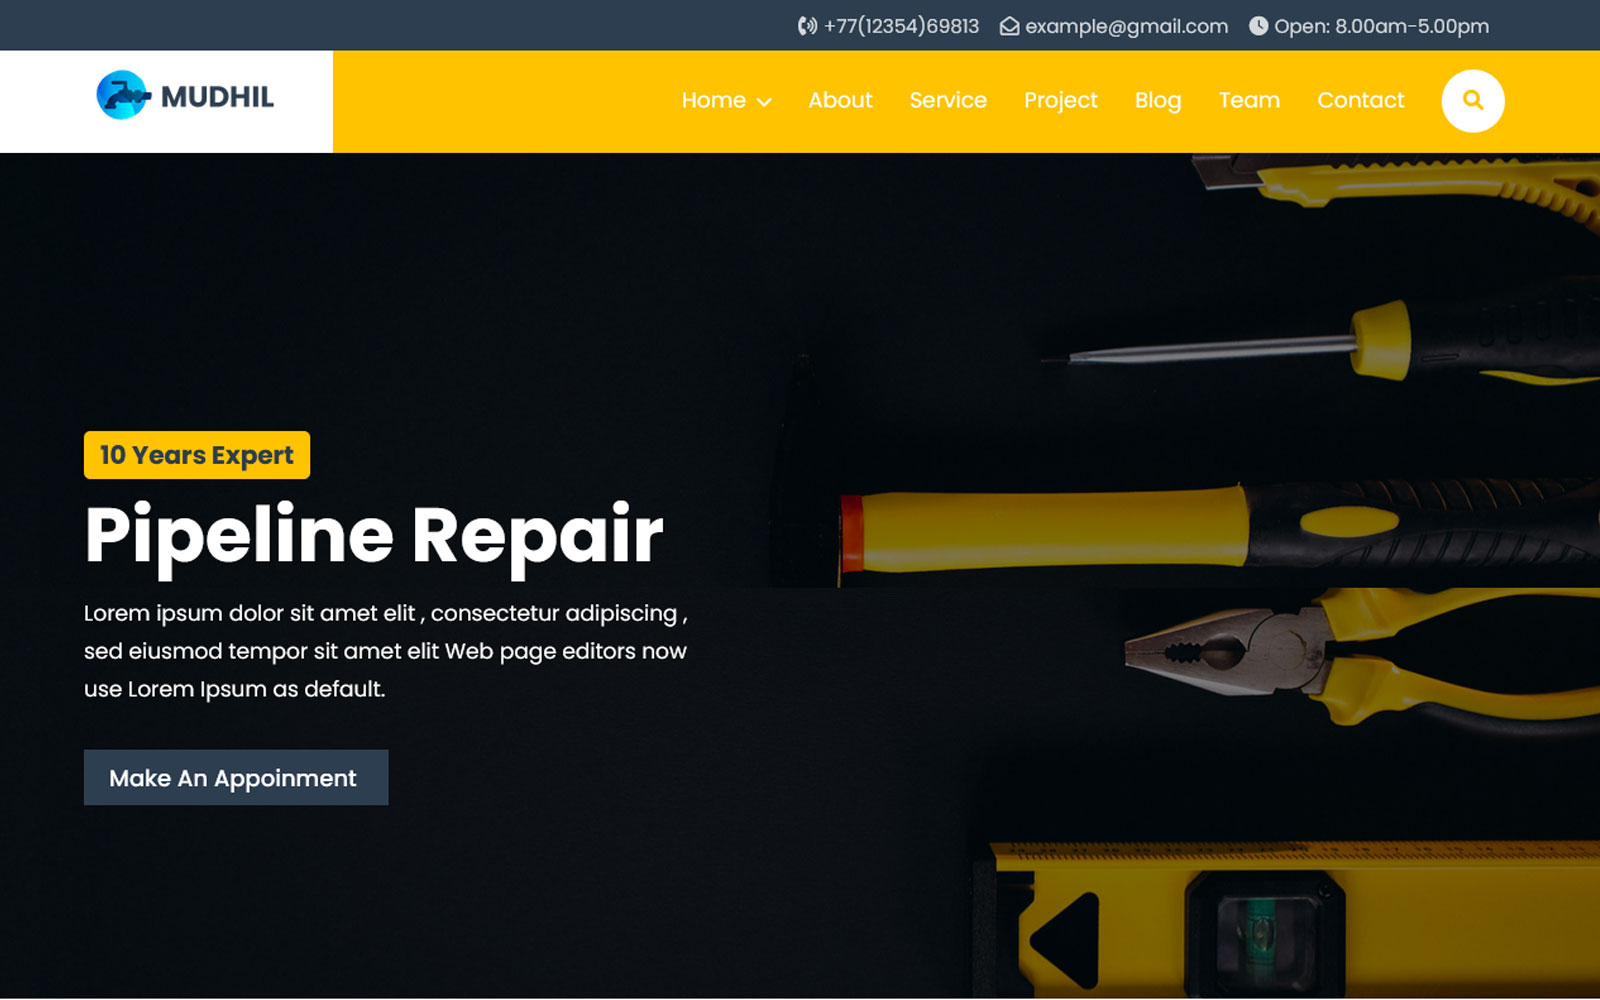 Mudhill - Plumber Repair Service  Landing Page Template